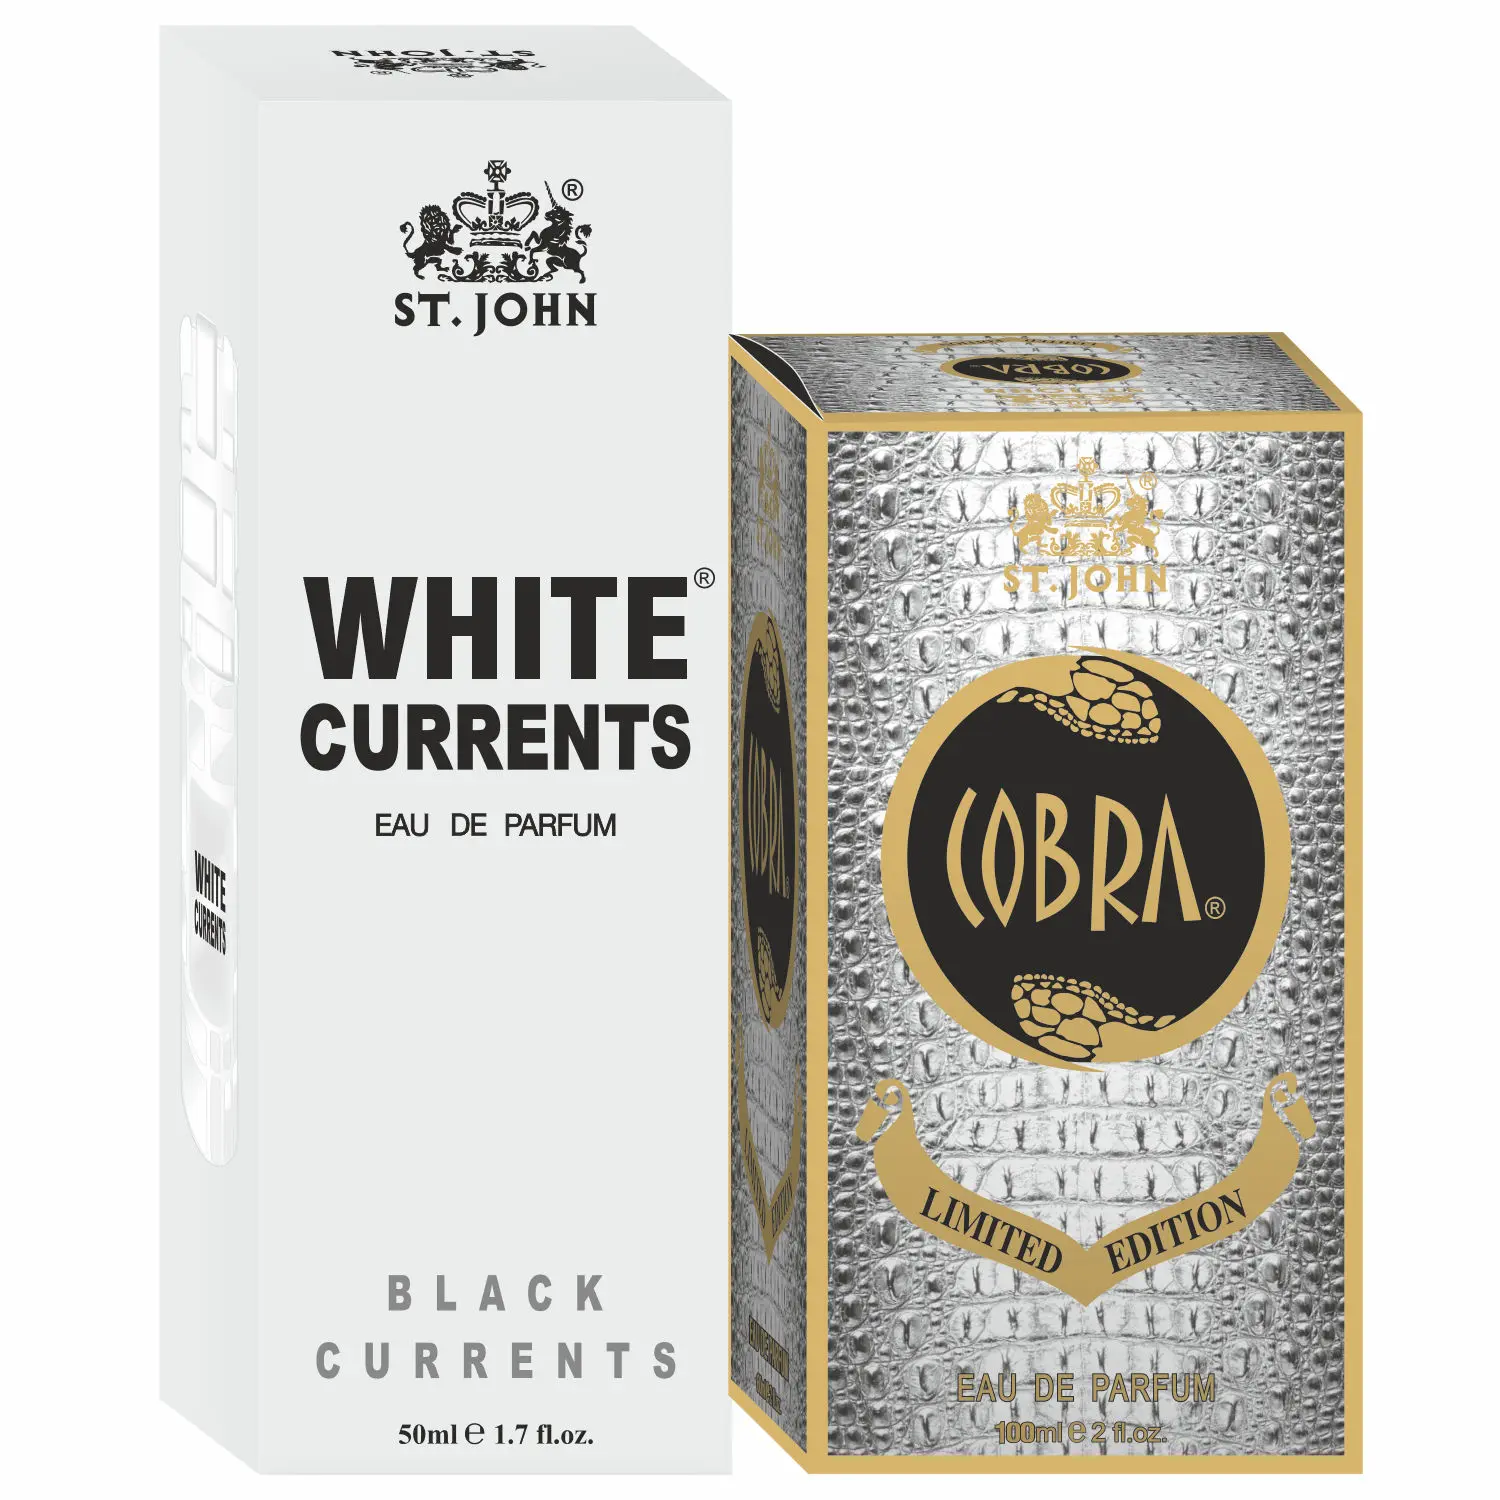 ST-JOHN Cobra Limited Edition 100ml & White Current 50ml Body Perfume Combo Gift Pack Eau de Parfum - 150 ml (For Men & Women)